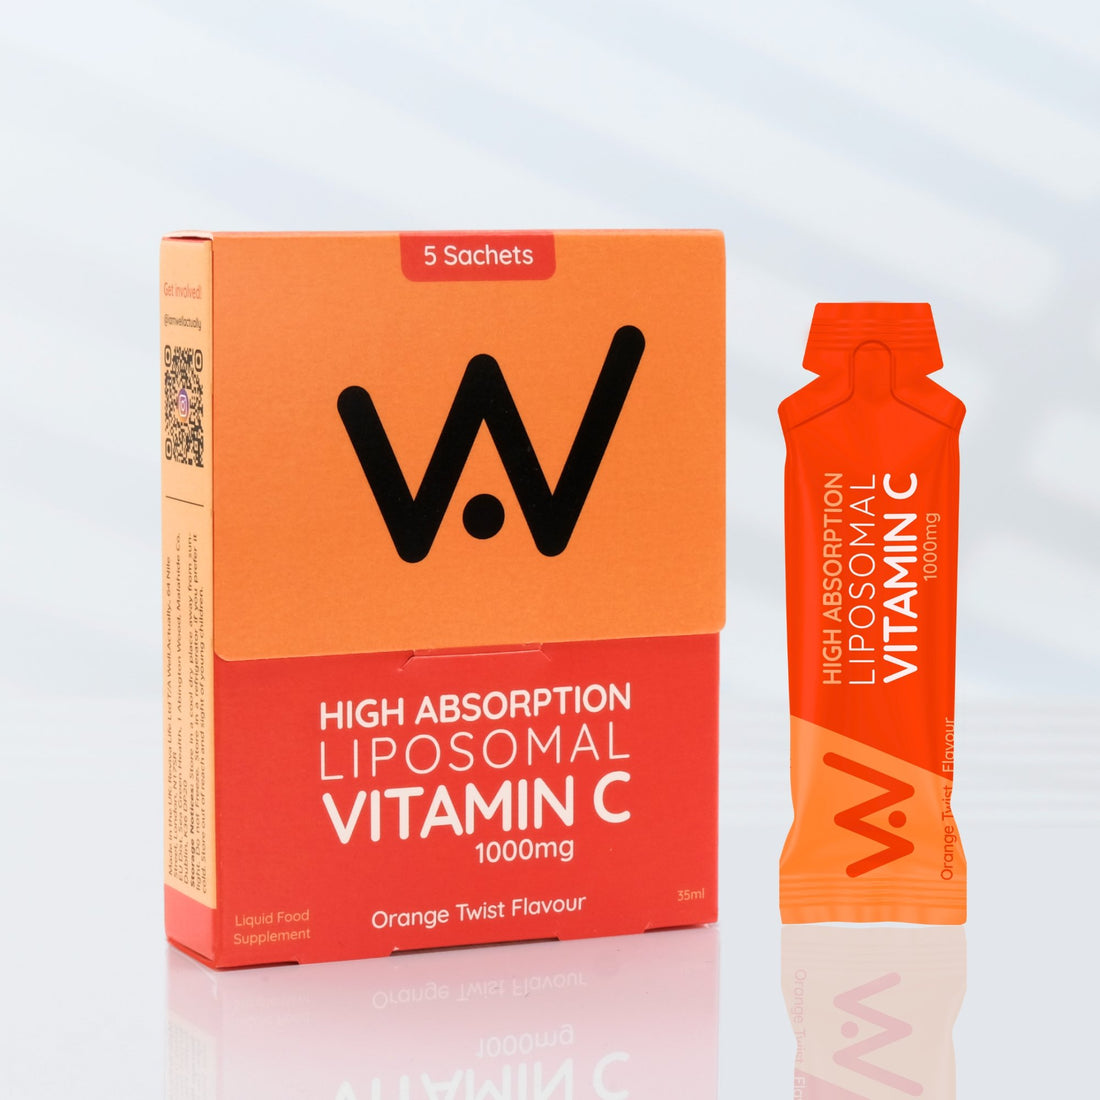 NEW Liposomal Vitamin C Liquid - 1000mg - 5 Sachet Pack - Orange Twist Flavour